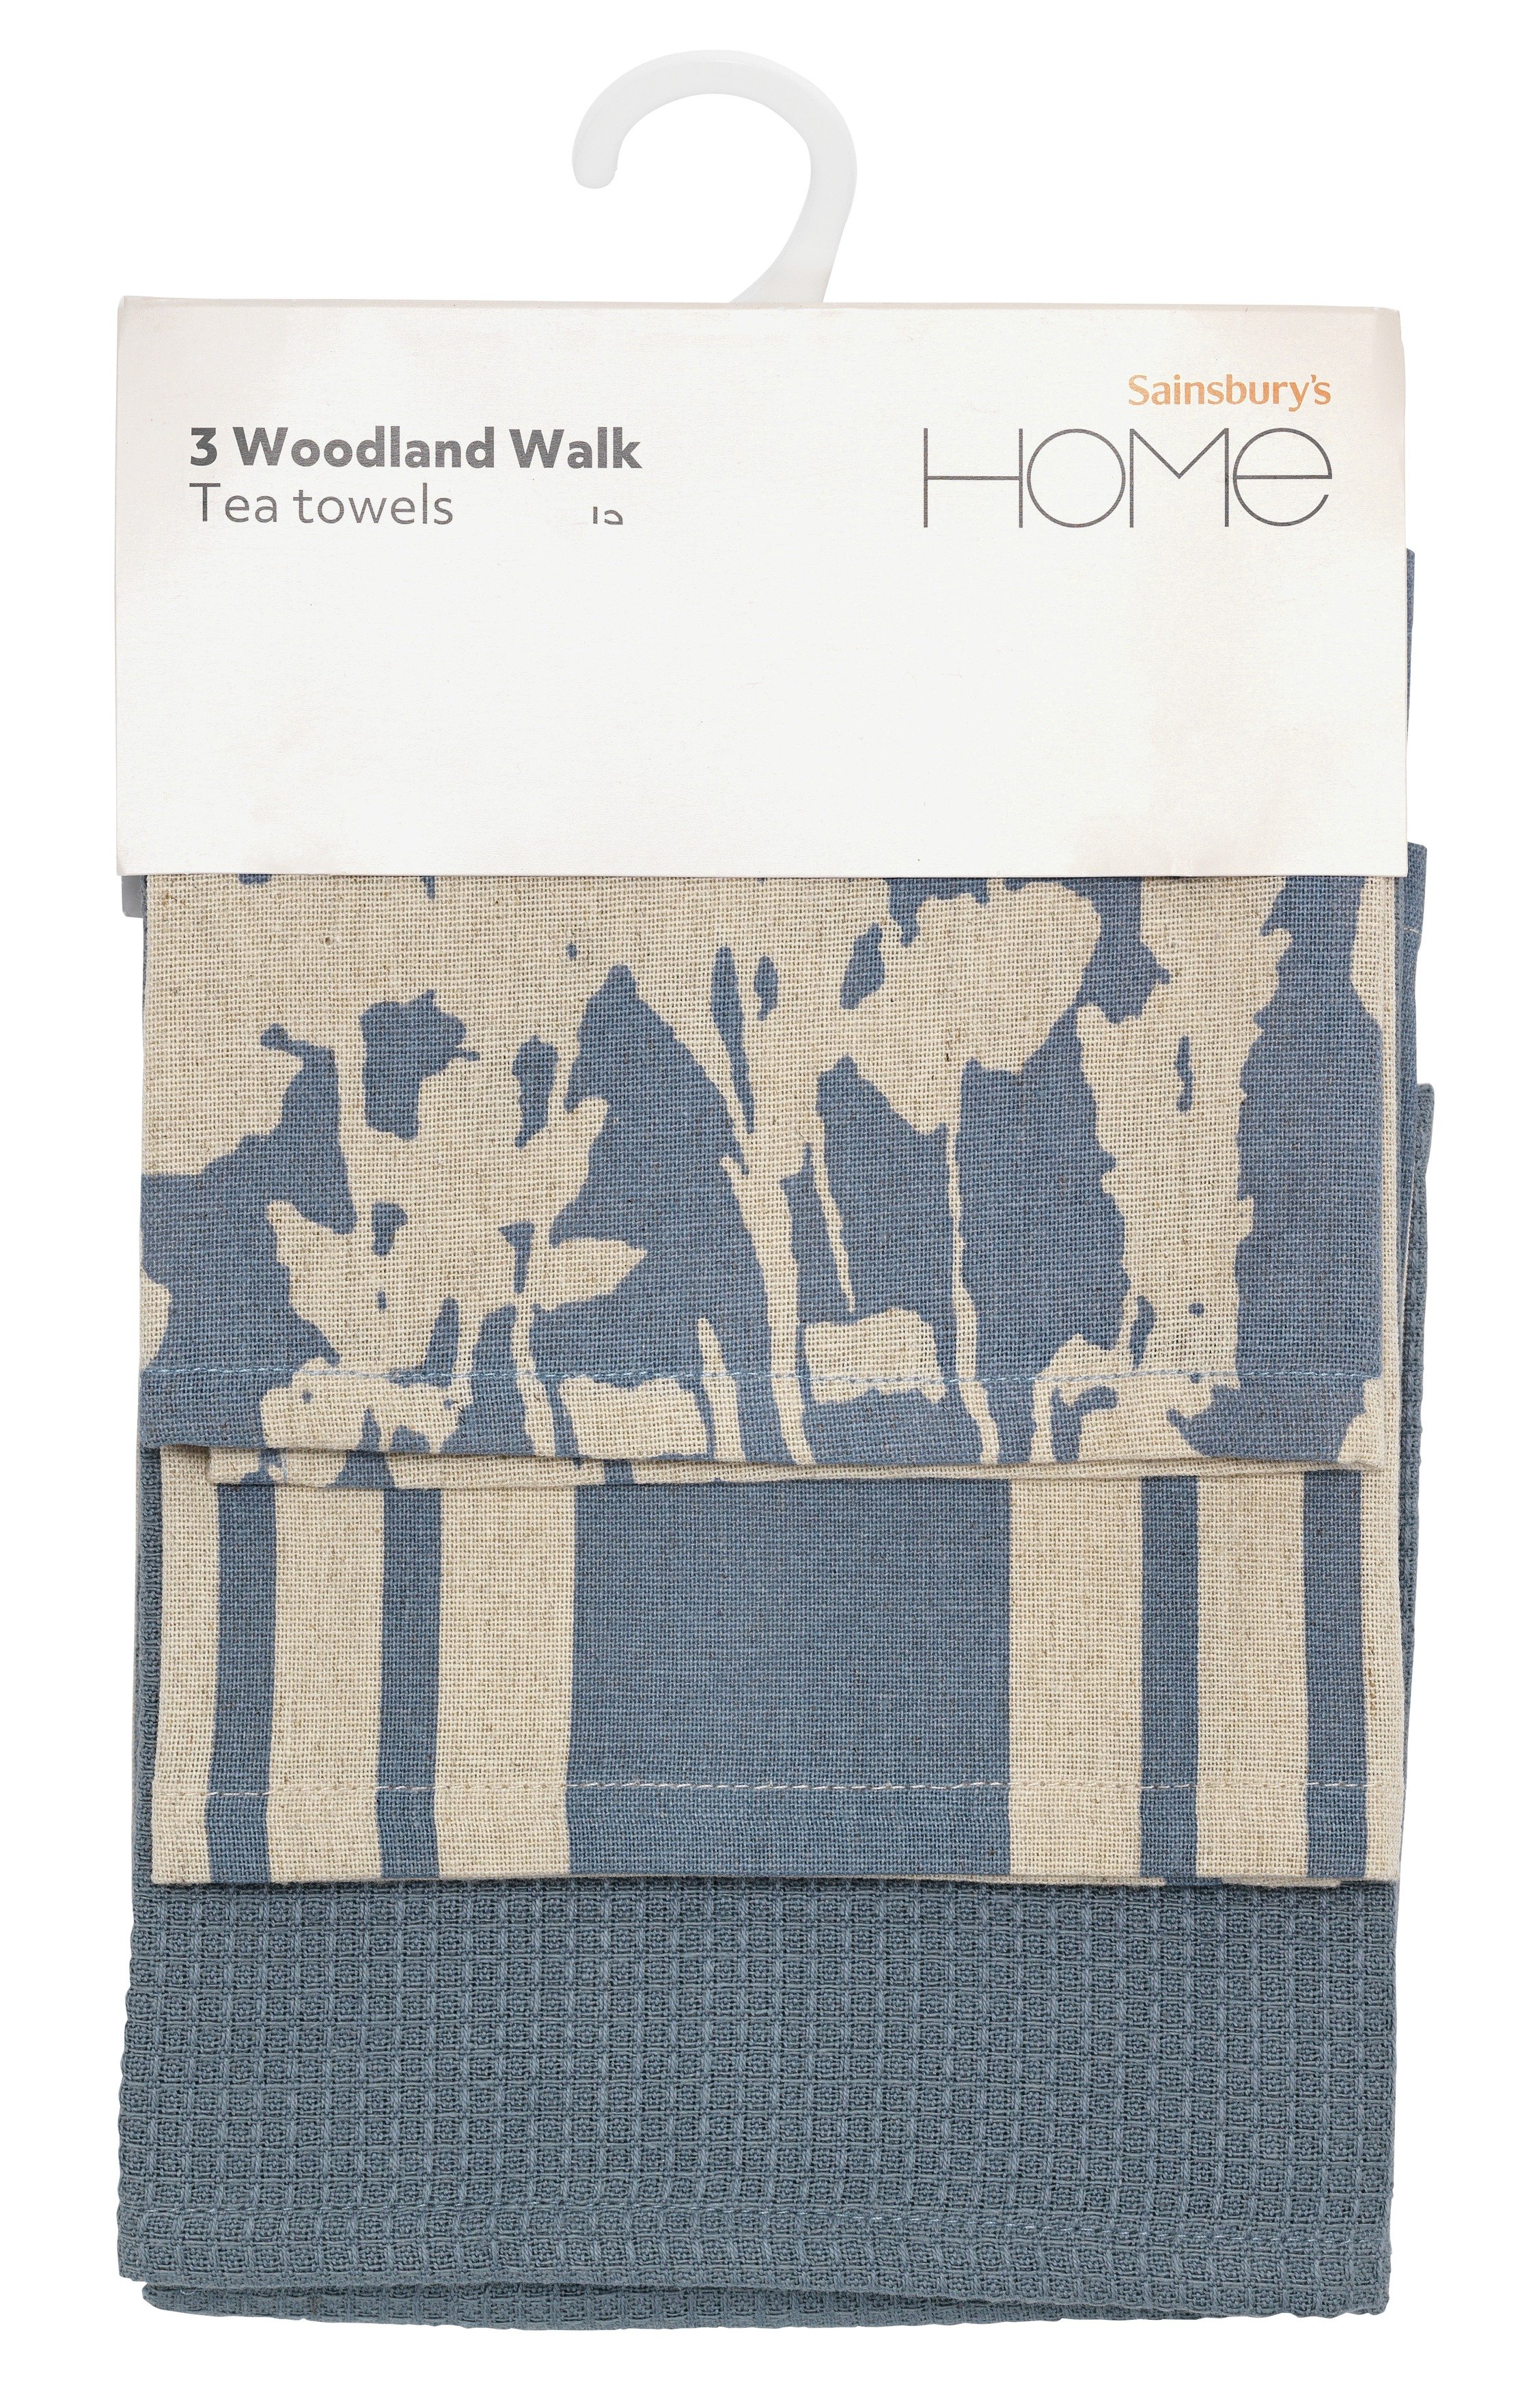 Sainsbury's Home Pack of 3 Woodland Walk Tea Towels